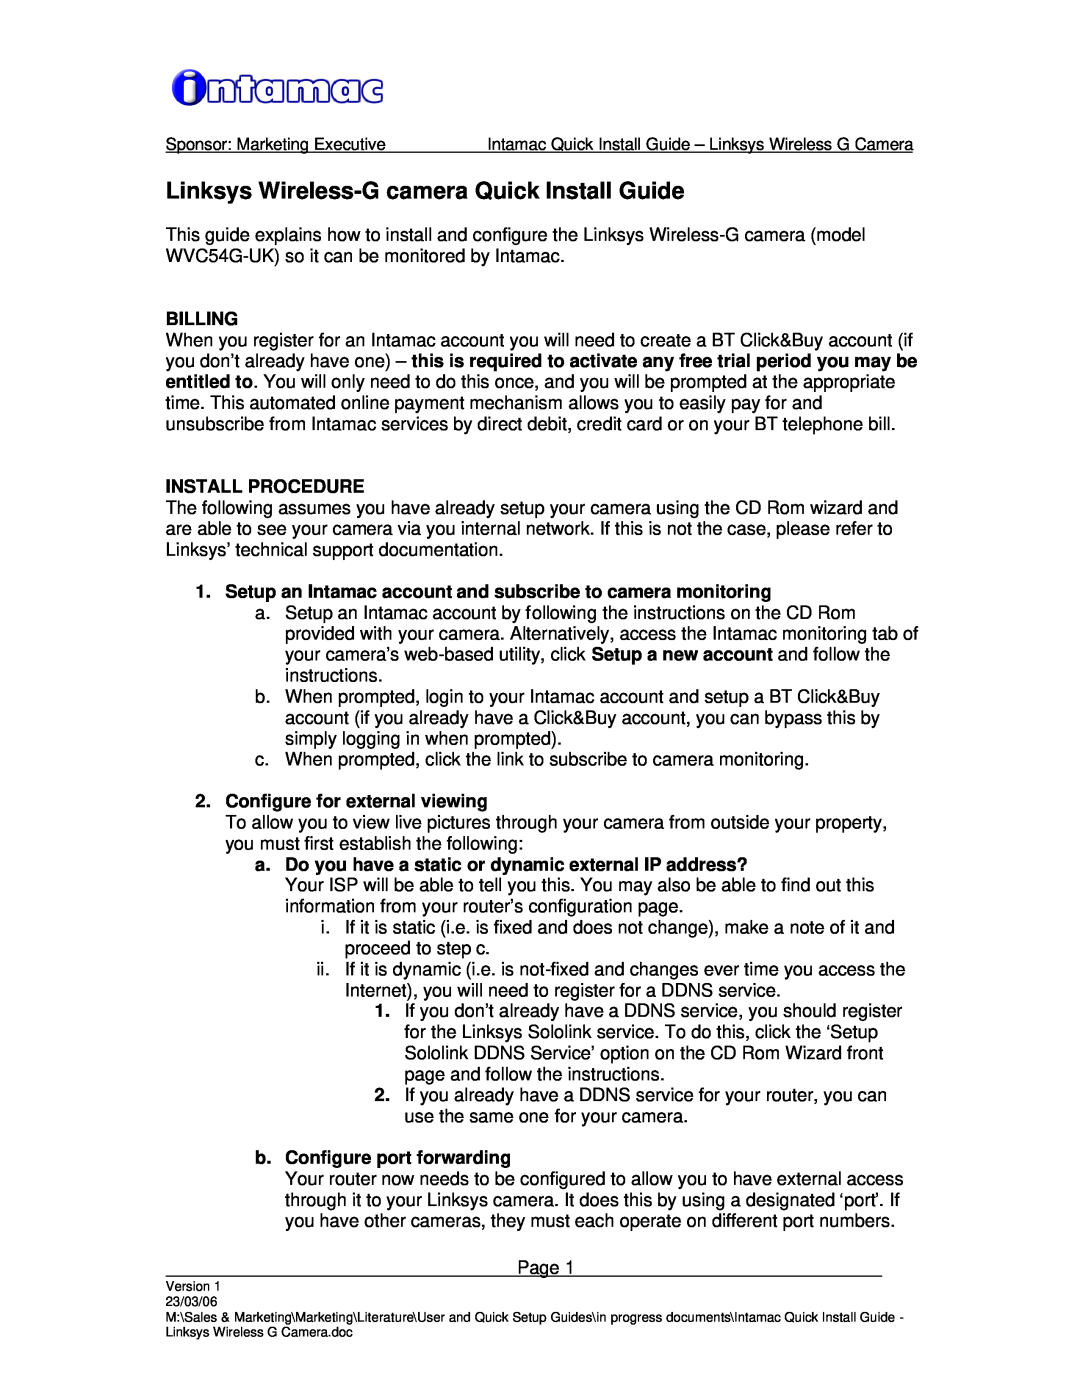 Linksys WVC54G-UK setup guide Billing, Install Procedure, Configure for external viewing, b.Configure port forwarding 